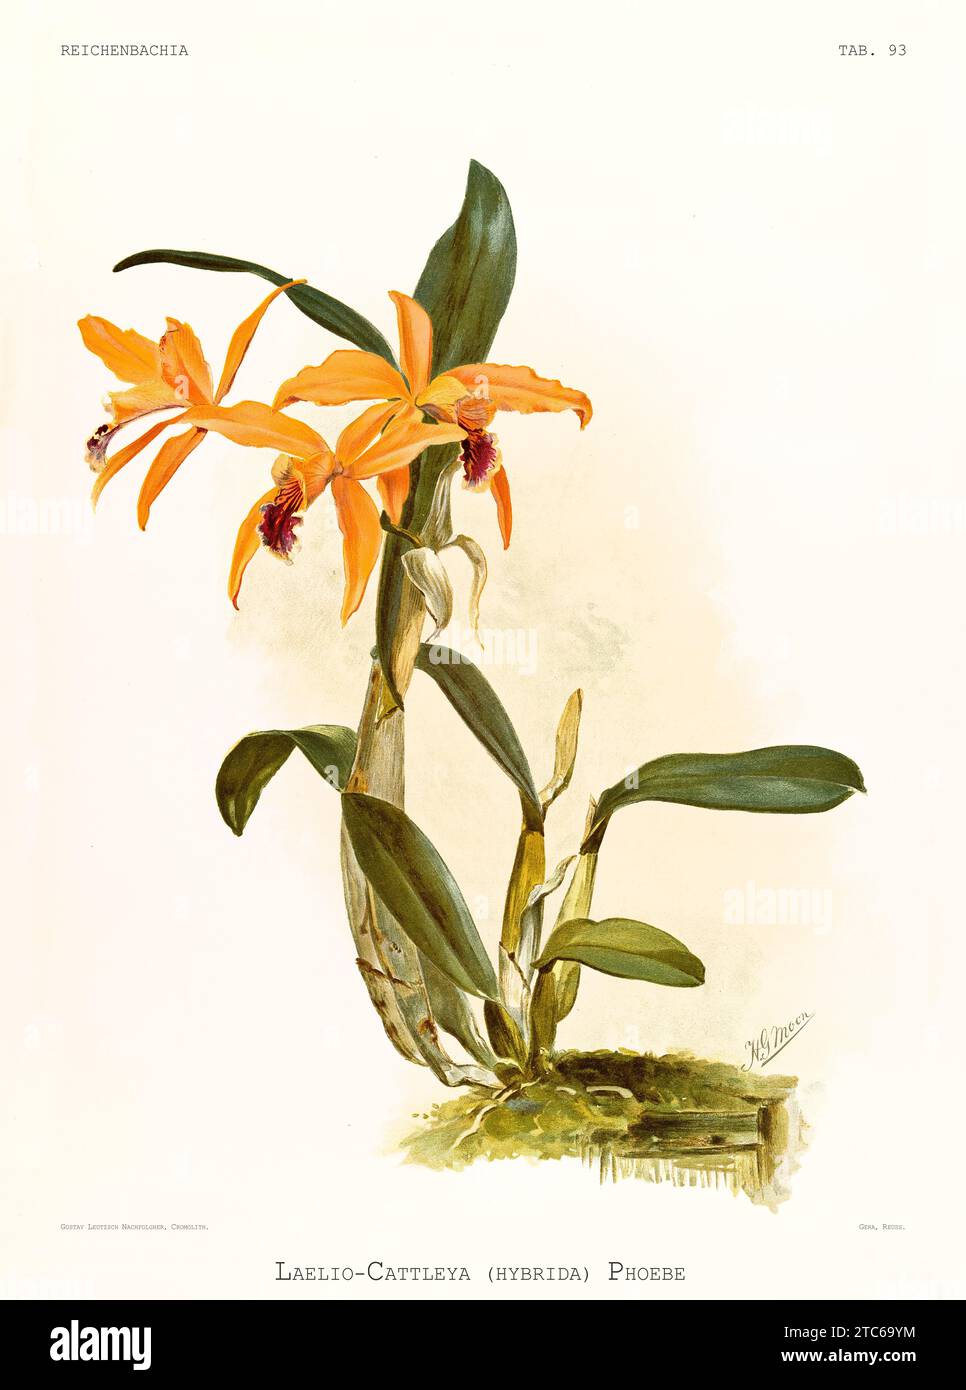 Old illustration of  Laelio-cattleya phoebe. Reichenbachia, by F. Sander. St. Albans, UK, 1888 - 1894 Stock Photo